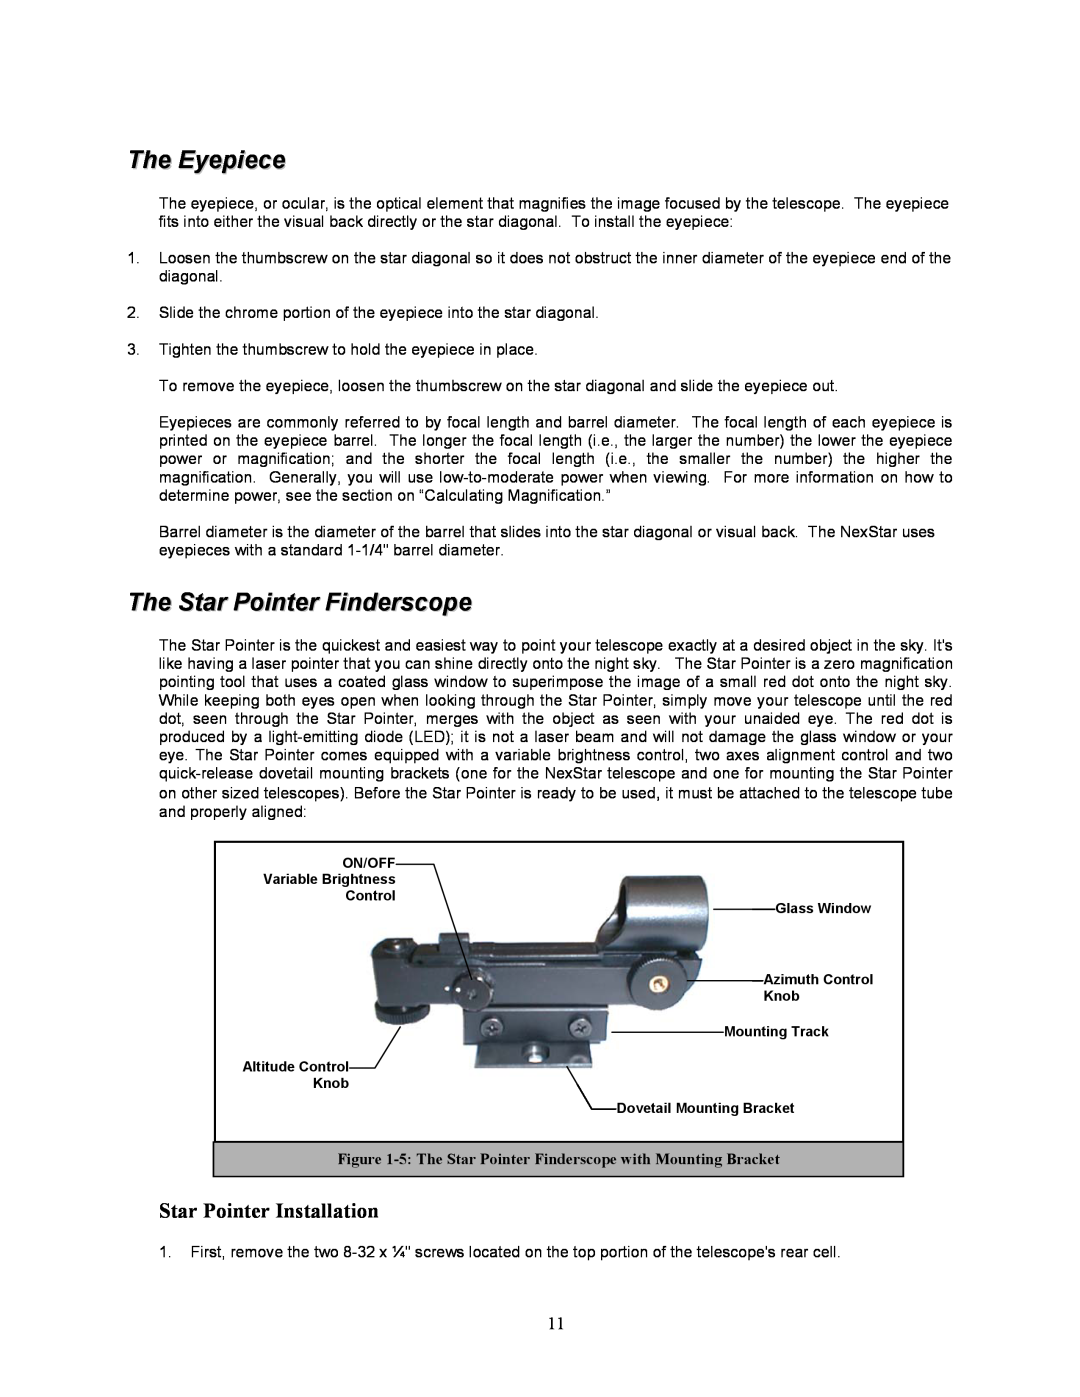 Celestron 8i manual The Eyepiece, The Star Pointer Finderscope, Star Pointer Installation 